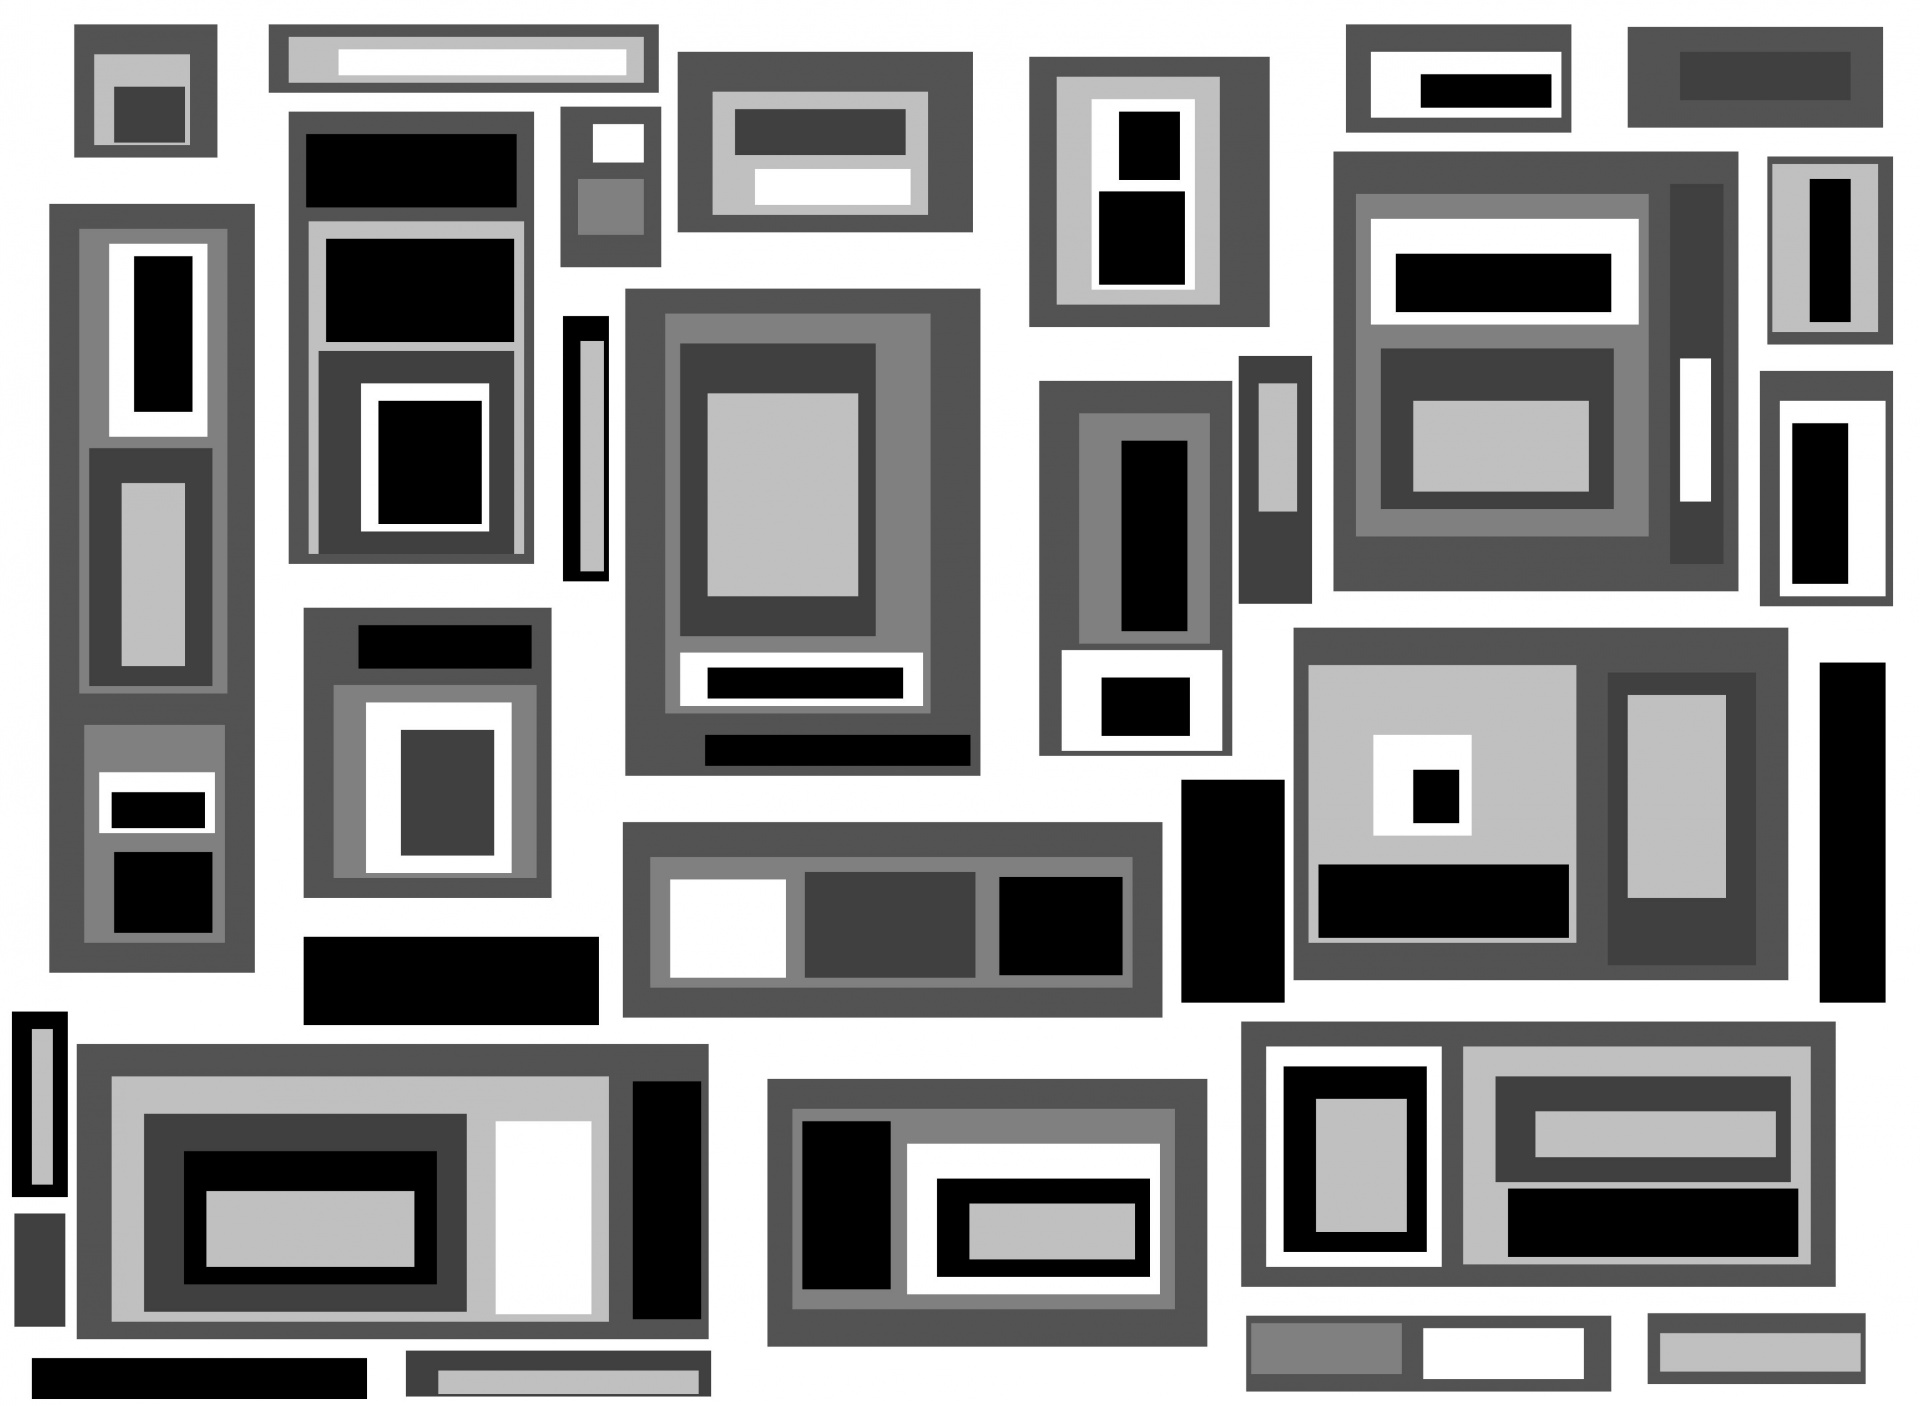 Zwarte en grijze vierkante blokken